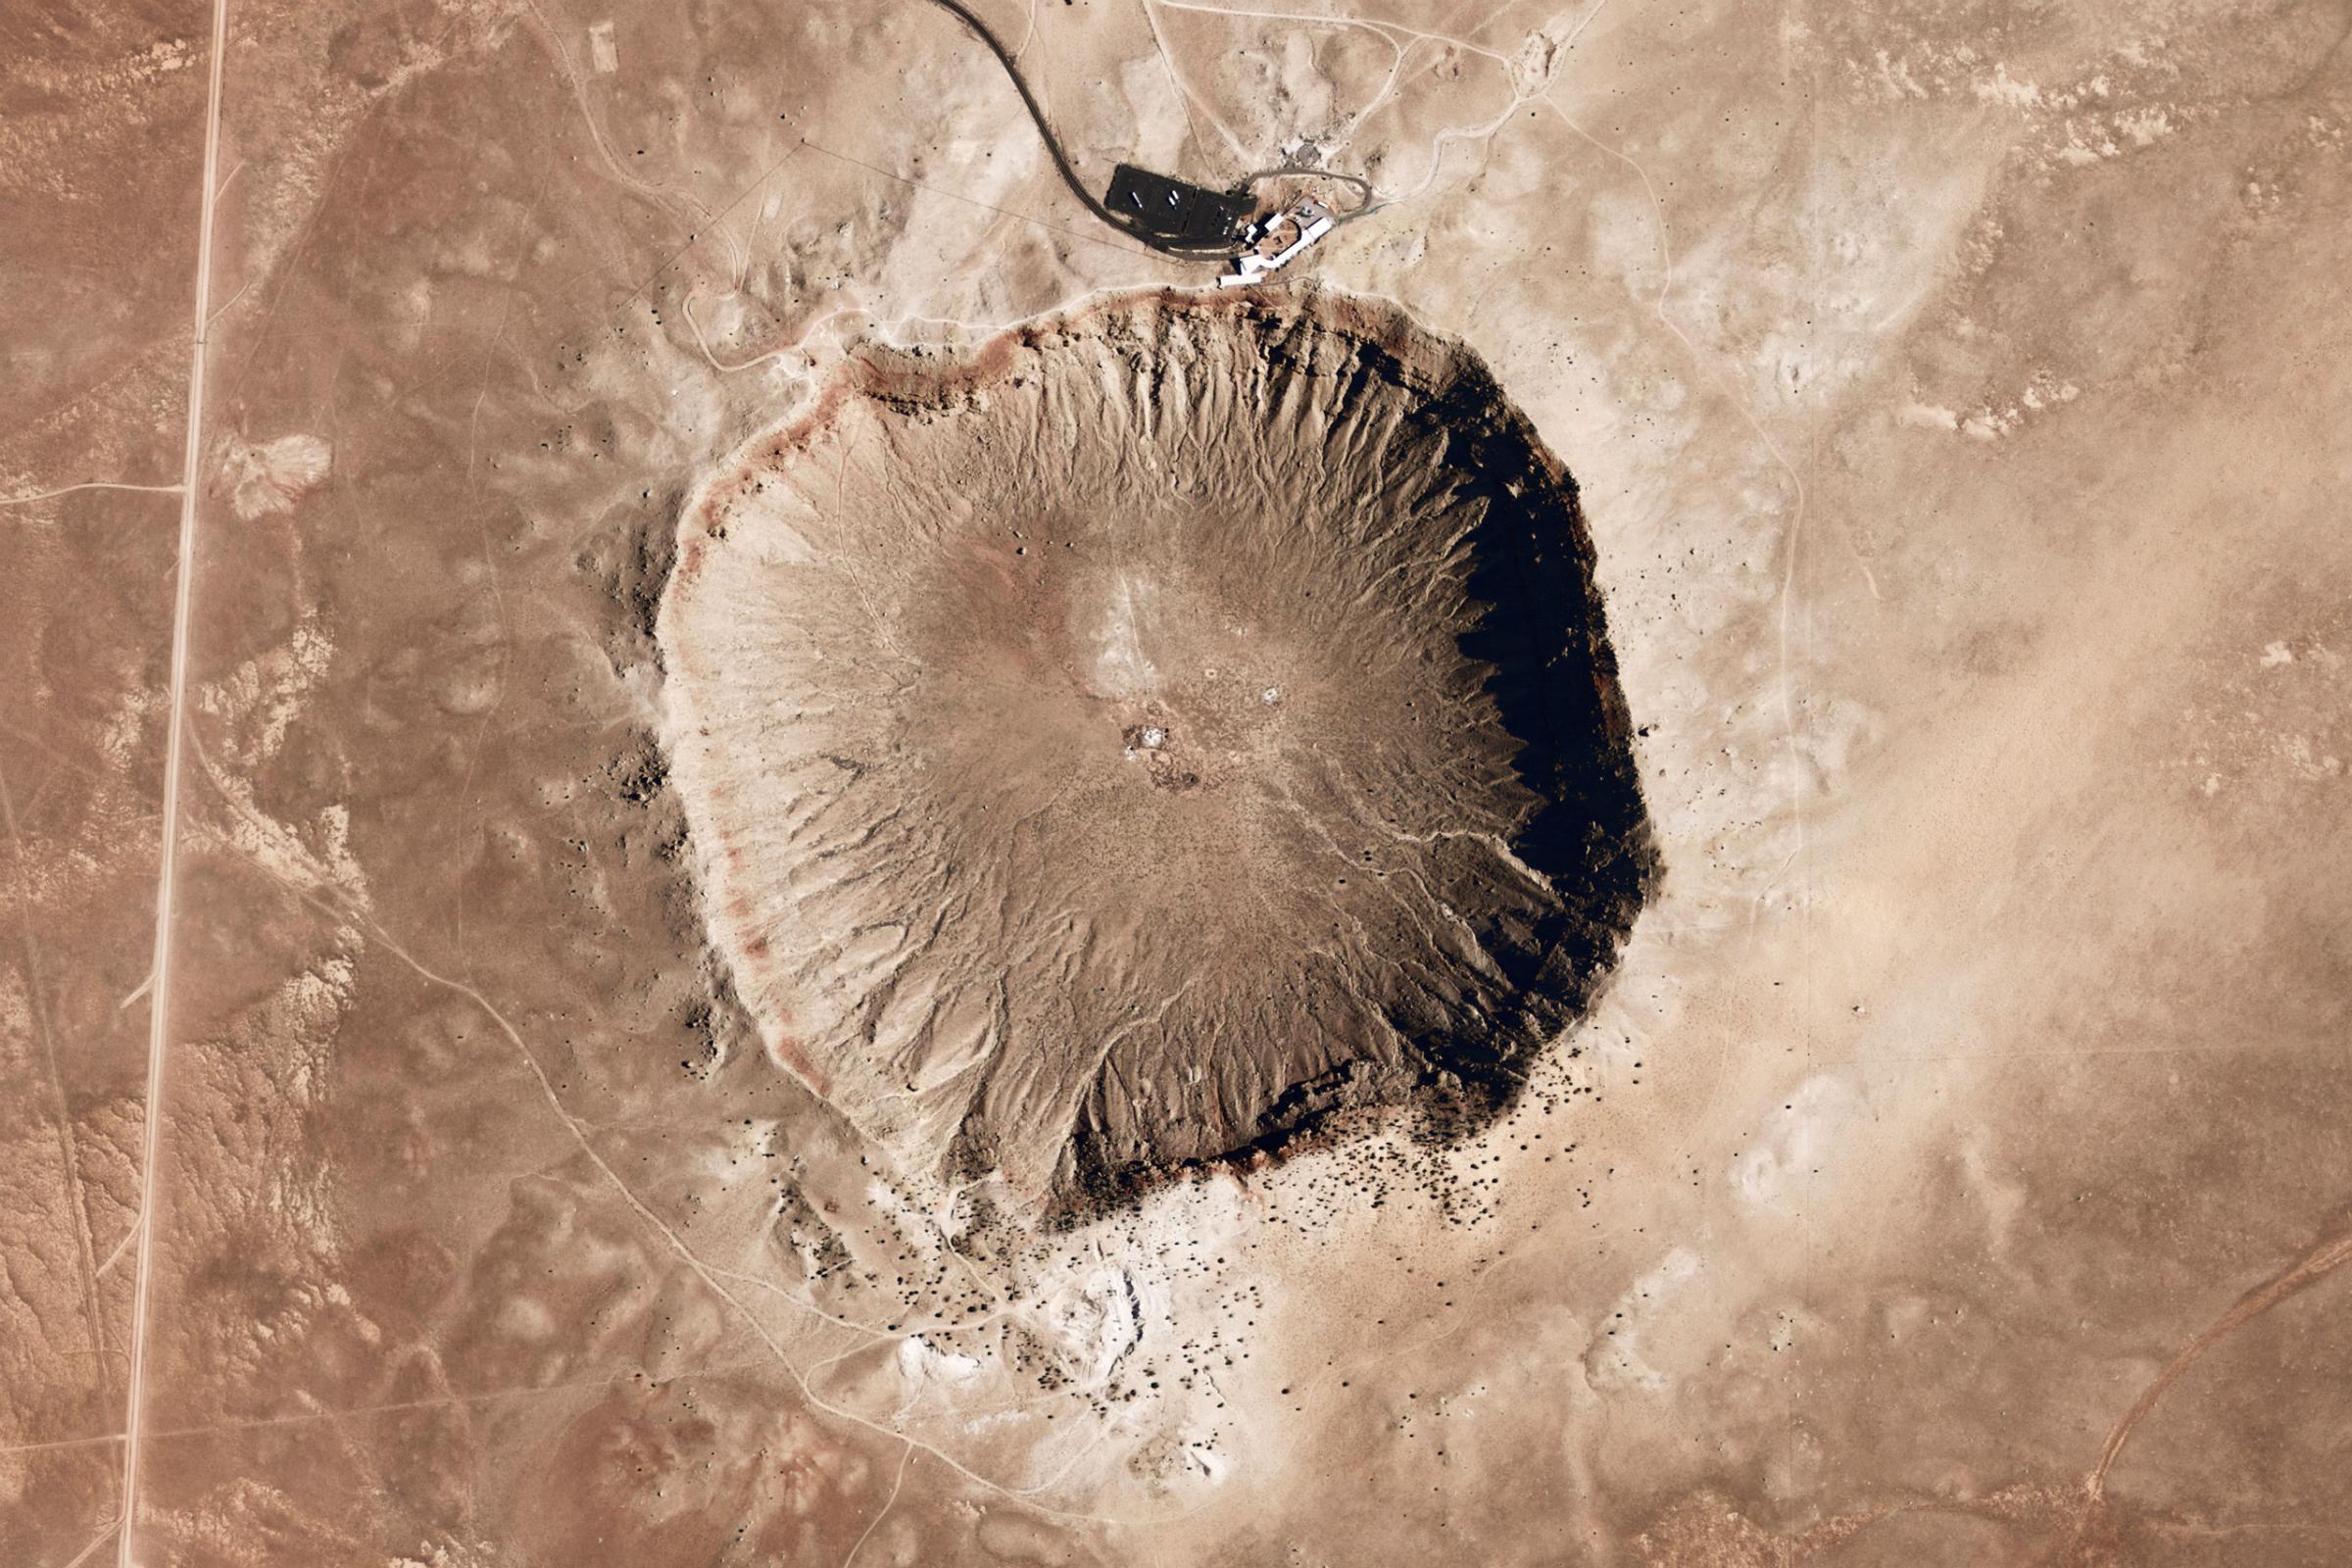 Barringer impact structure meteor crater Arizona